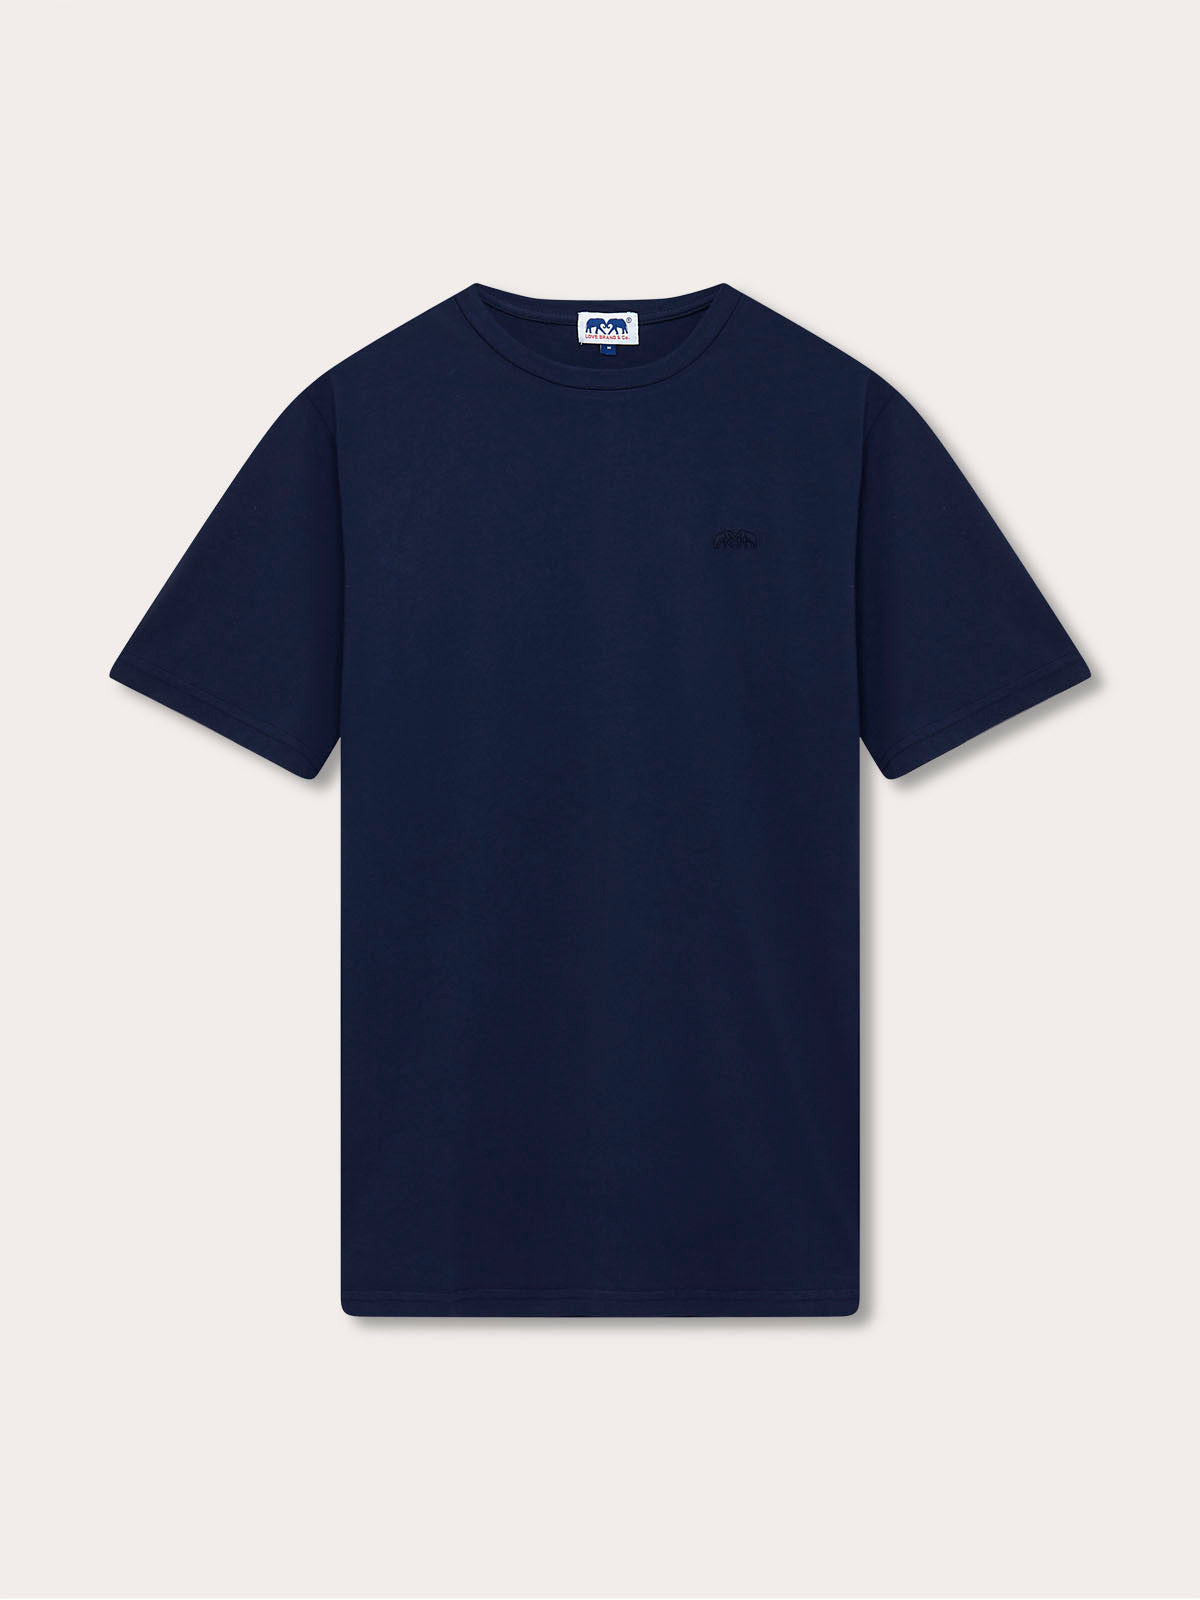 Men’s Navy Blue Lockhart T-Shirt